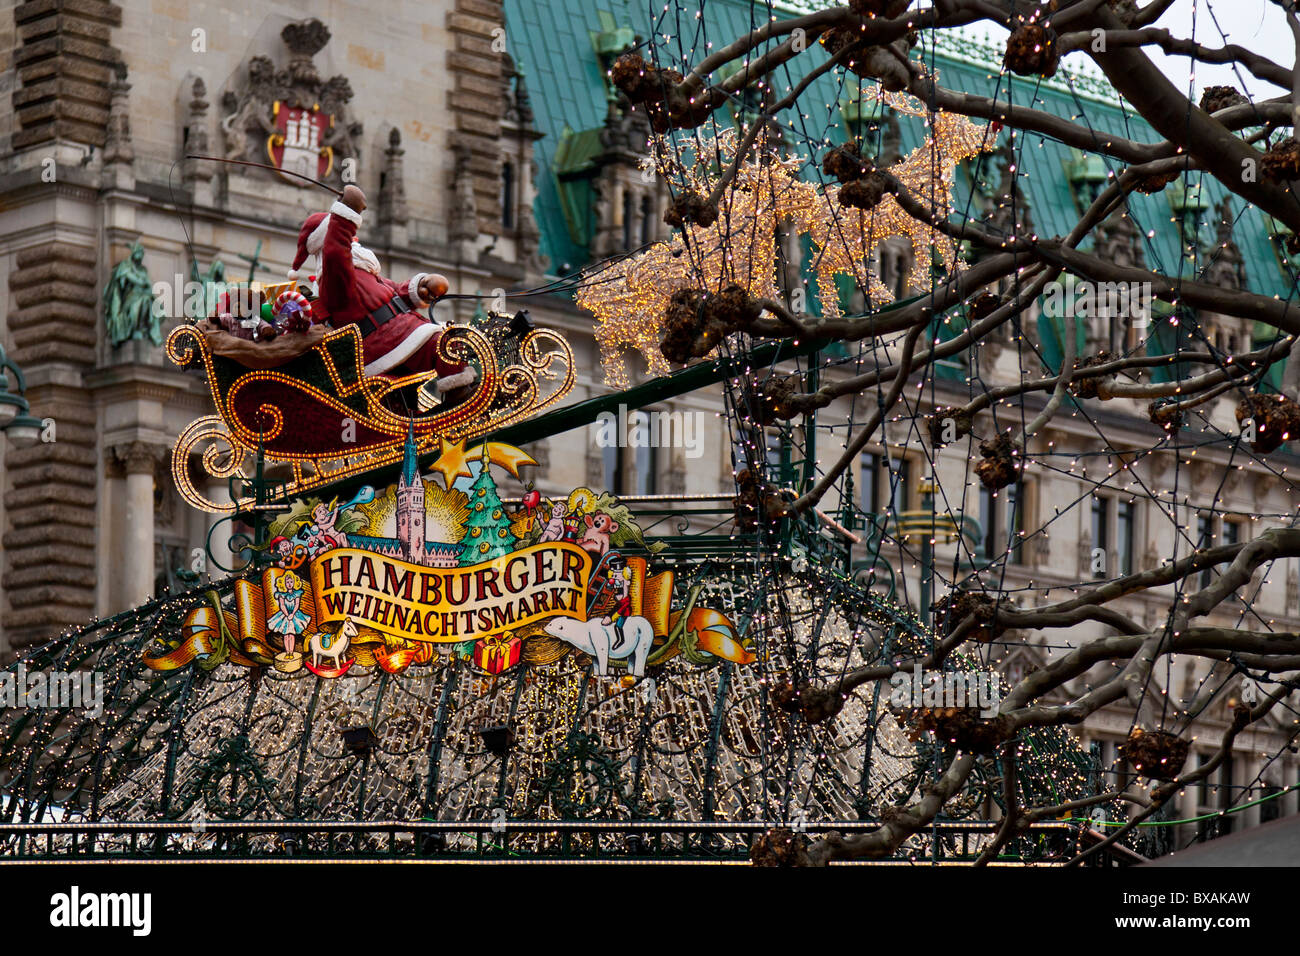 Main entrance to the Hamburger Weihnachtsmarkt / Hamburg Christmas Market in the Rathausplatz. Stock Photo